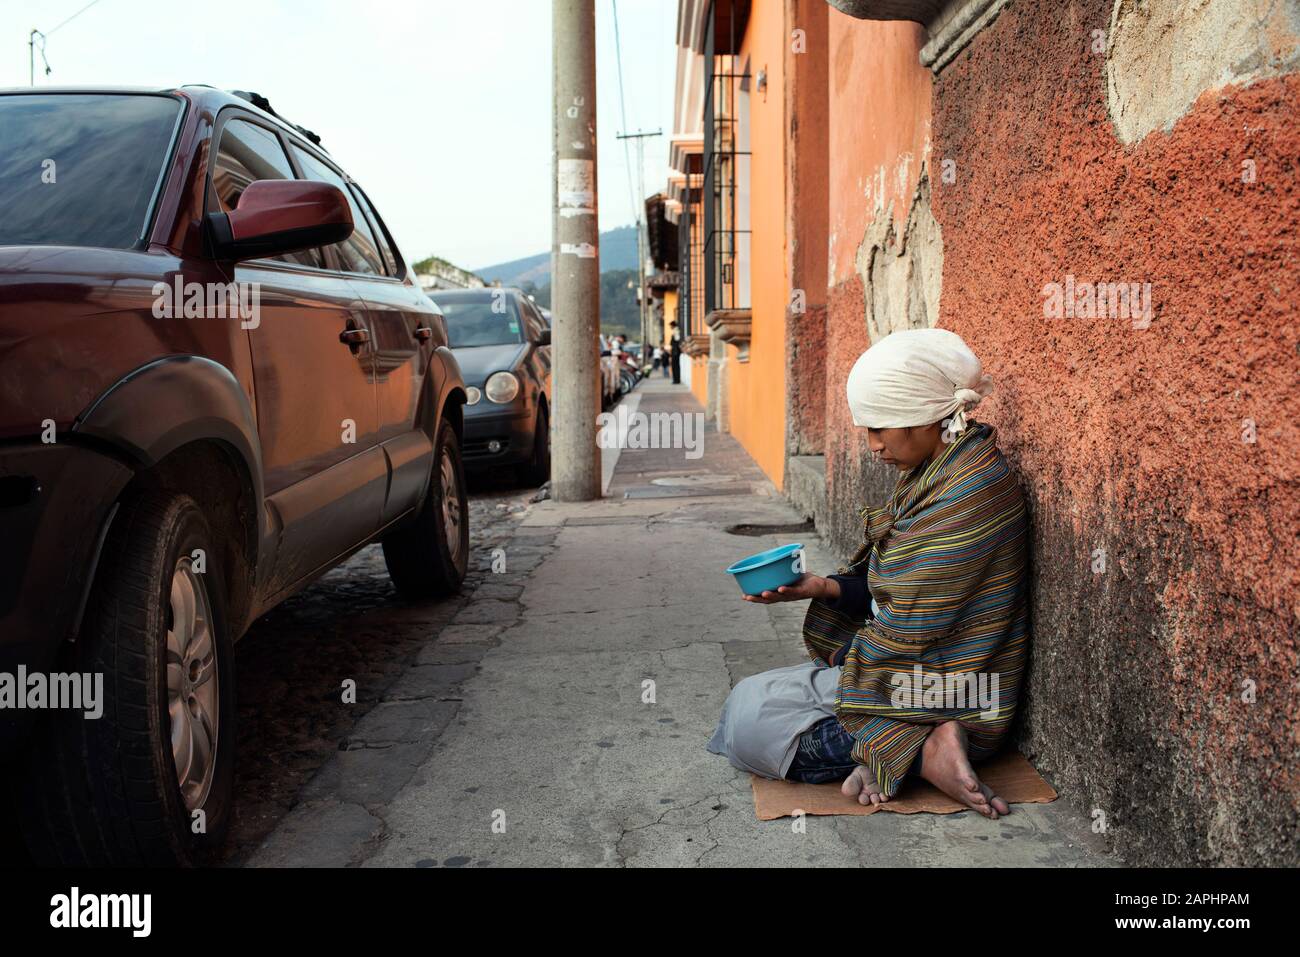 Indigenous Guatemalan woman begging on street near a luxury car. Inequality in Antigua, Guatemala. Jan 2019 Stock Photo